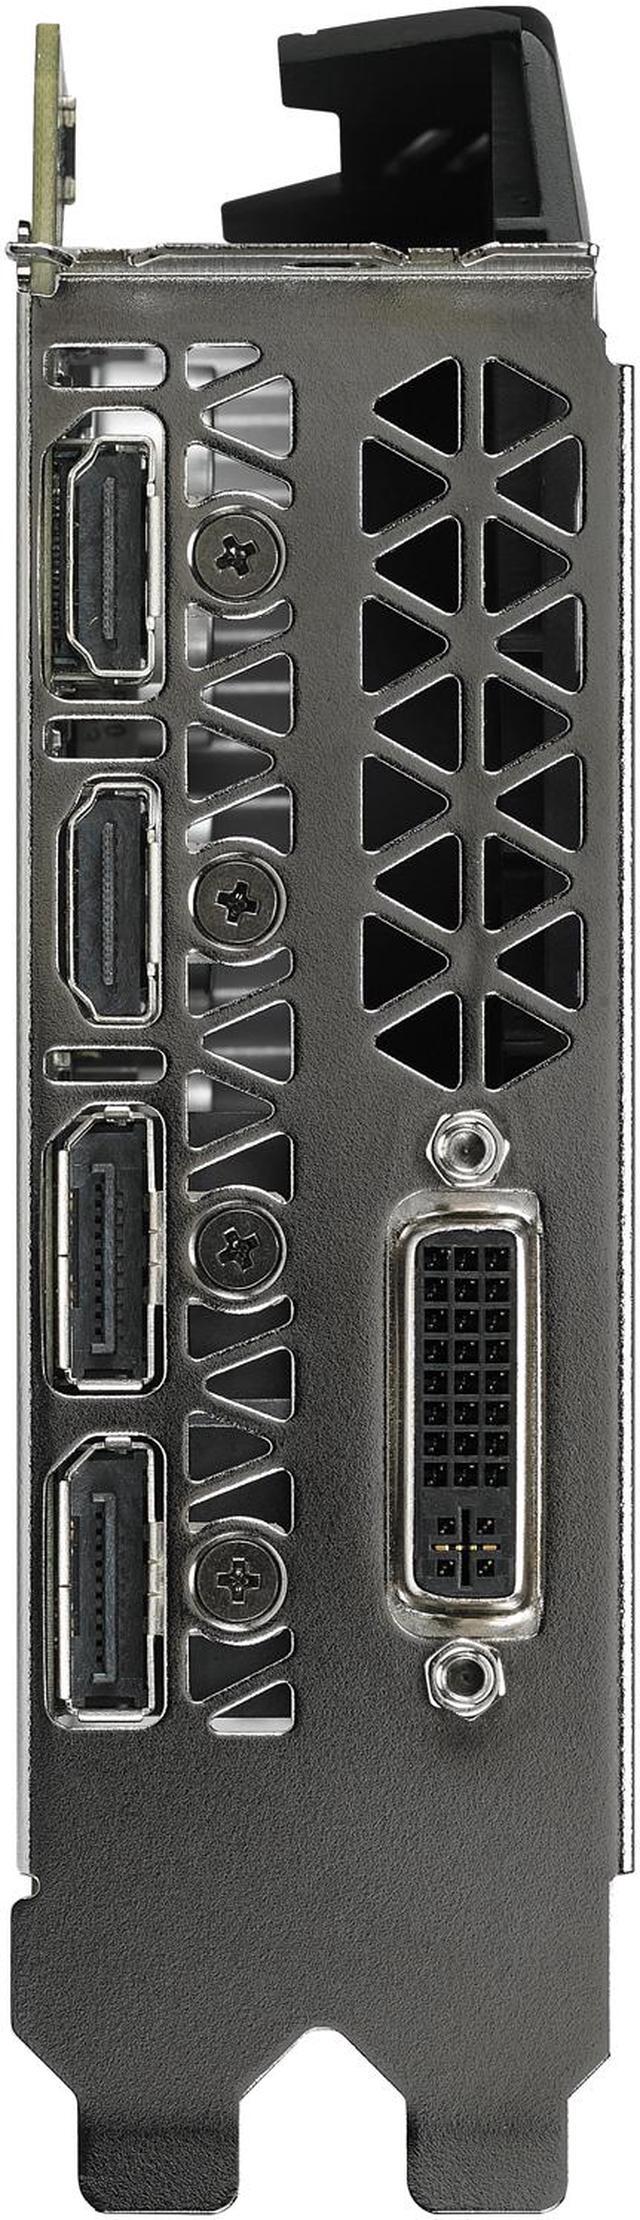  ASUS Geforce GTX 1060 6GB Turbo Edition VR Ready Dual HDMI 2.0  DP 1.4 Auto-Extreme Graphics Card (TURBO-GTX1060-6G) : Electronics